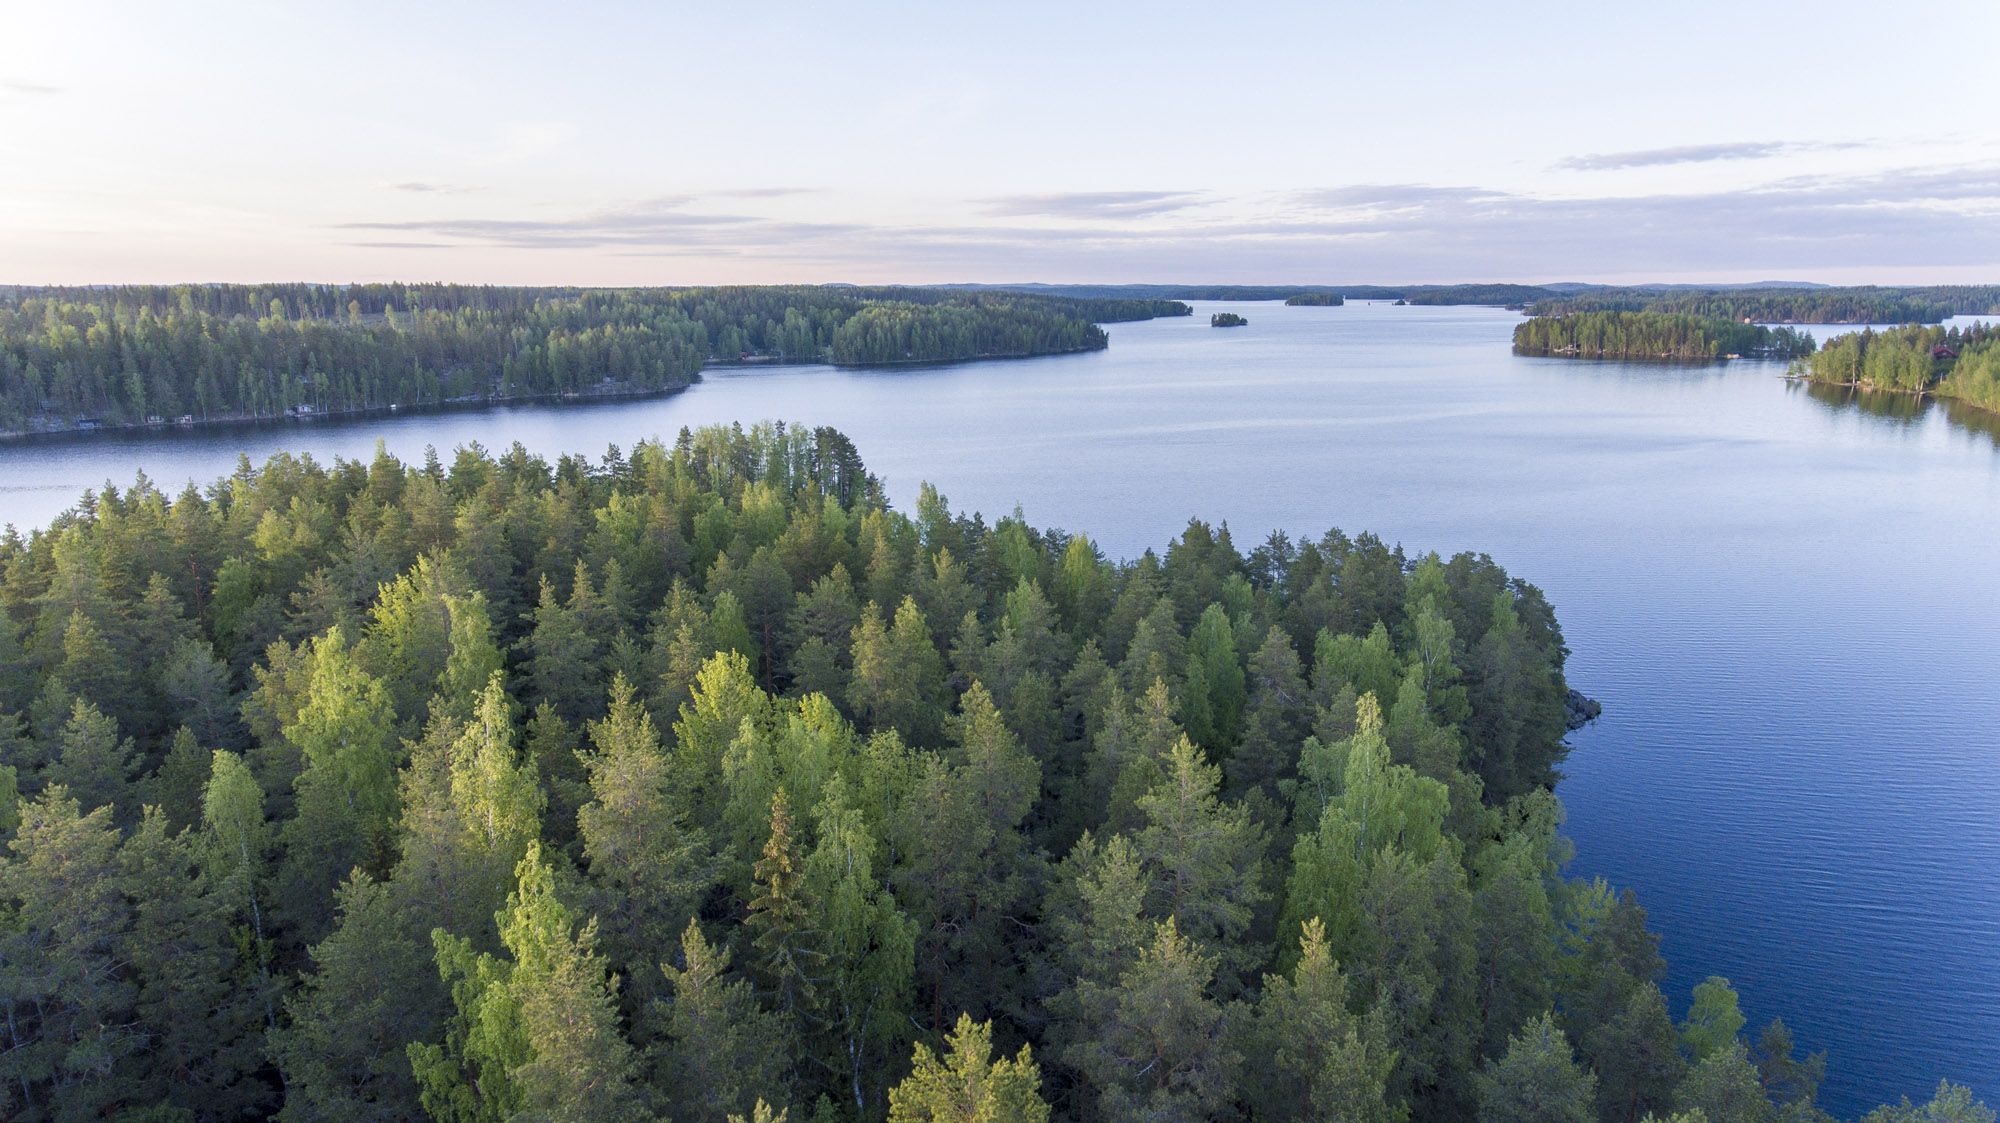 Metsät-Tontunniemi-Drone-04.jpg